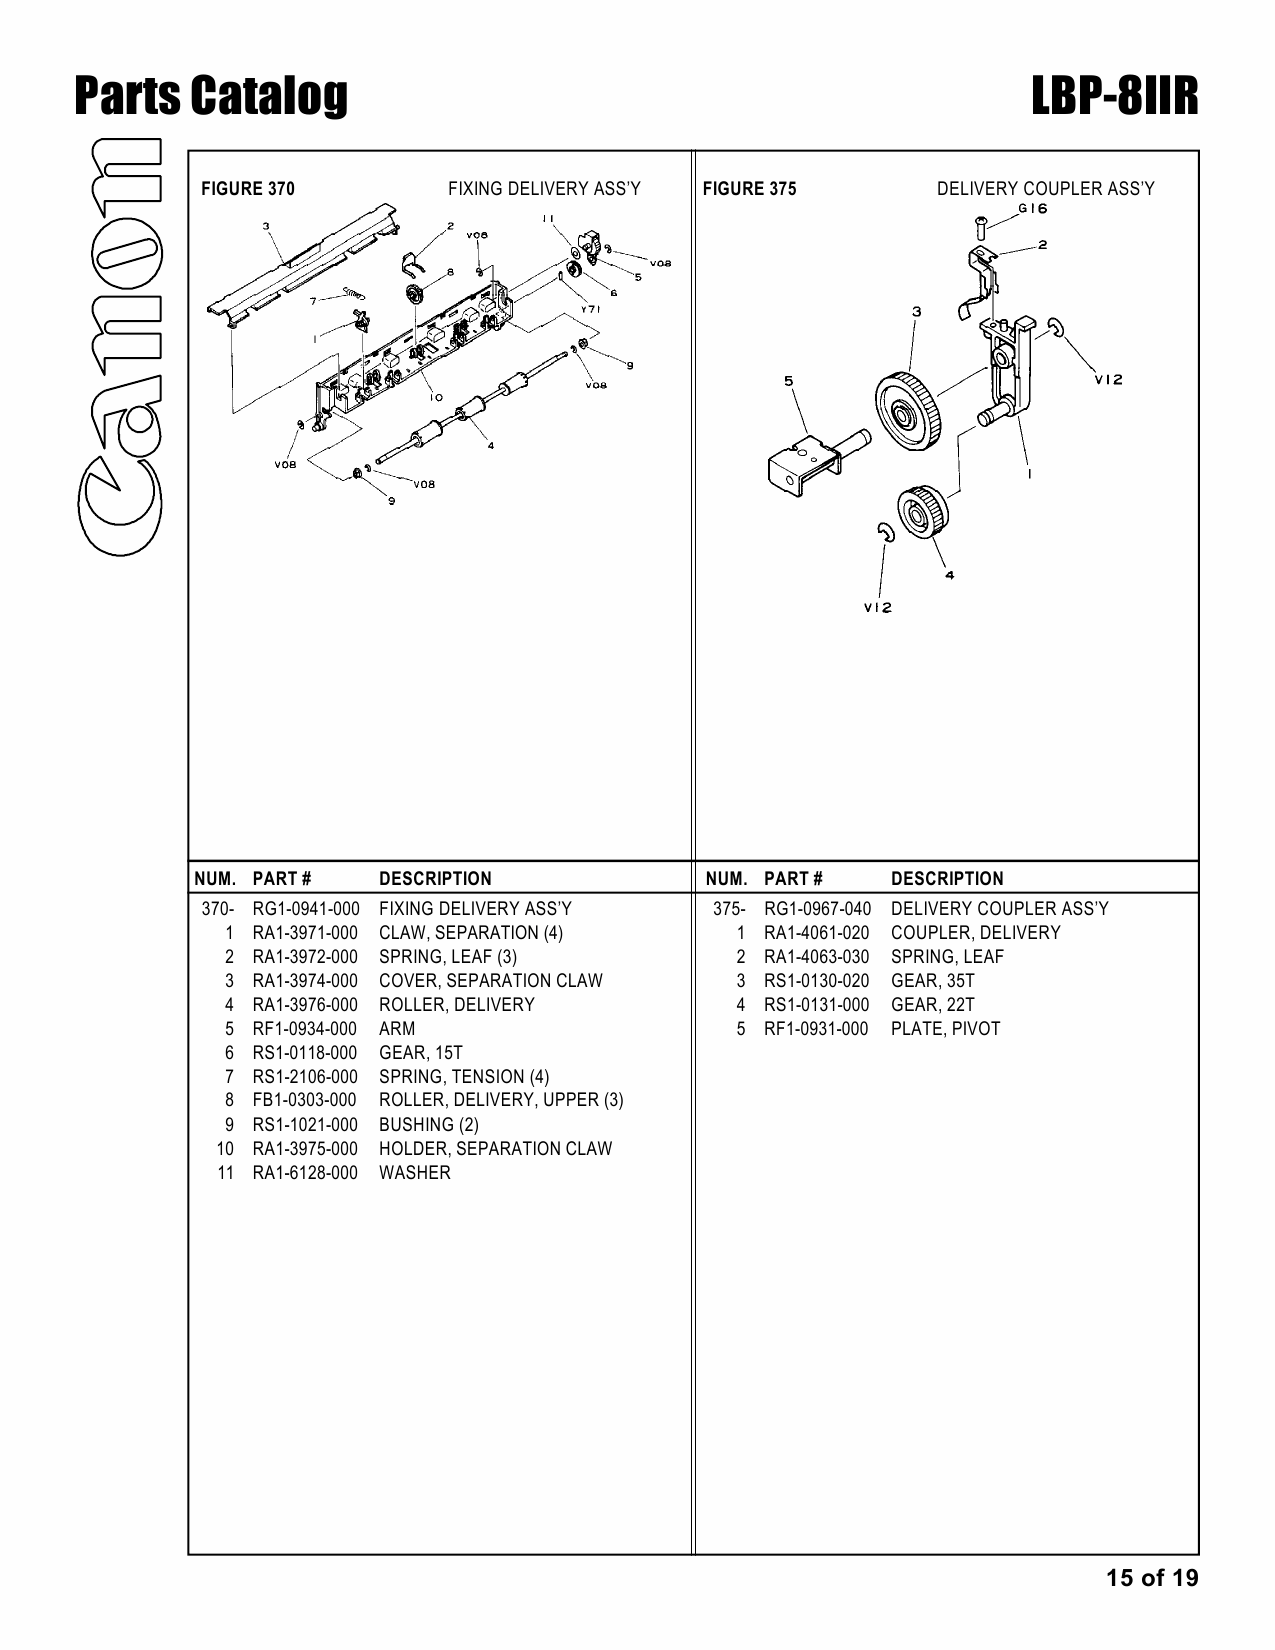 Canon imageCLASS LBP-8IIR Parts Catalog Manual-4